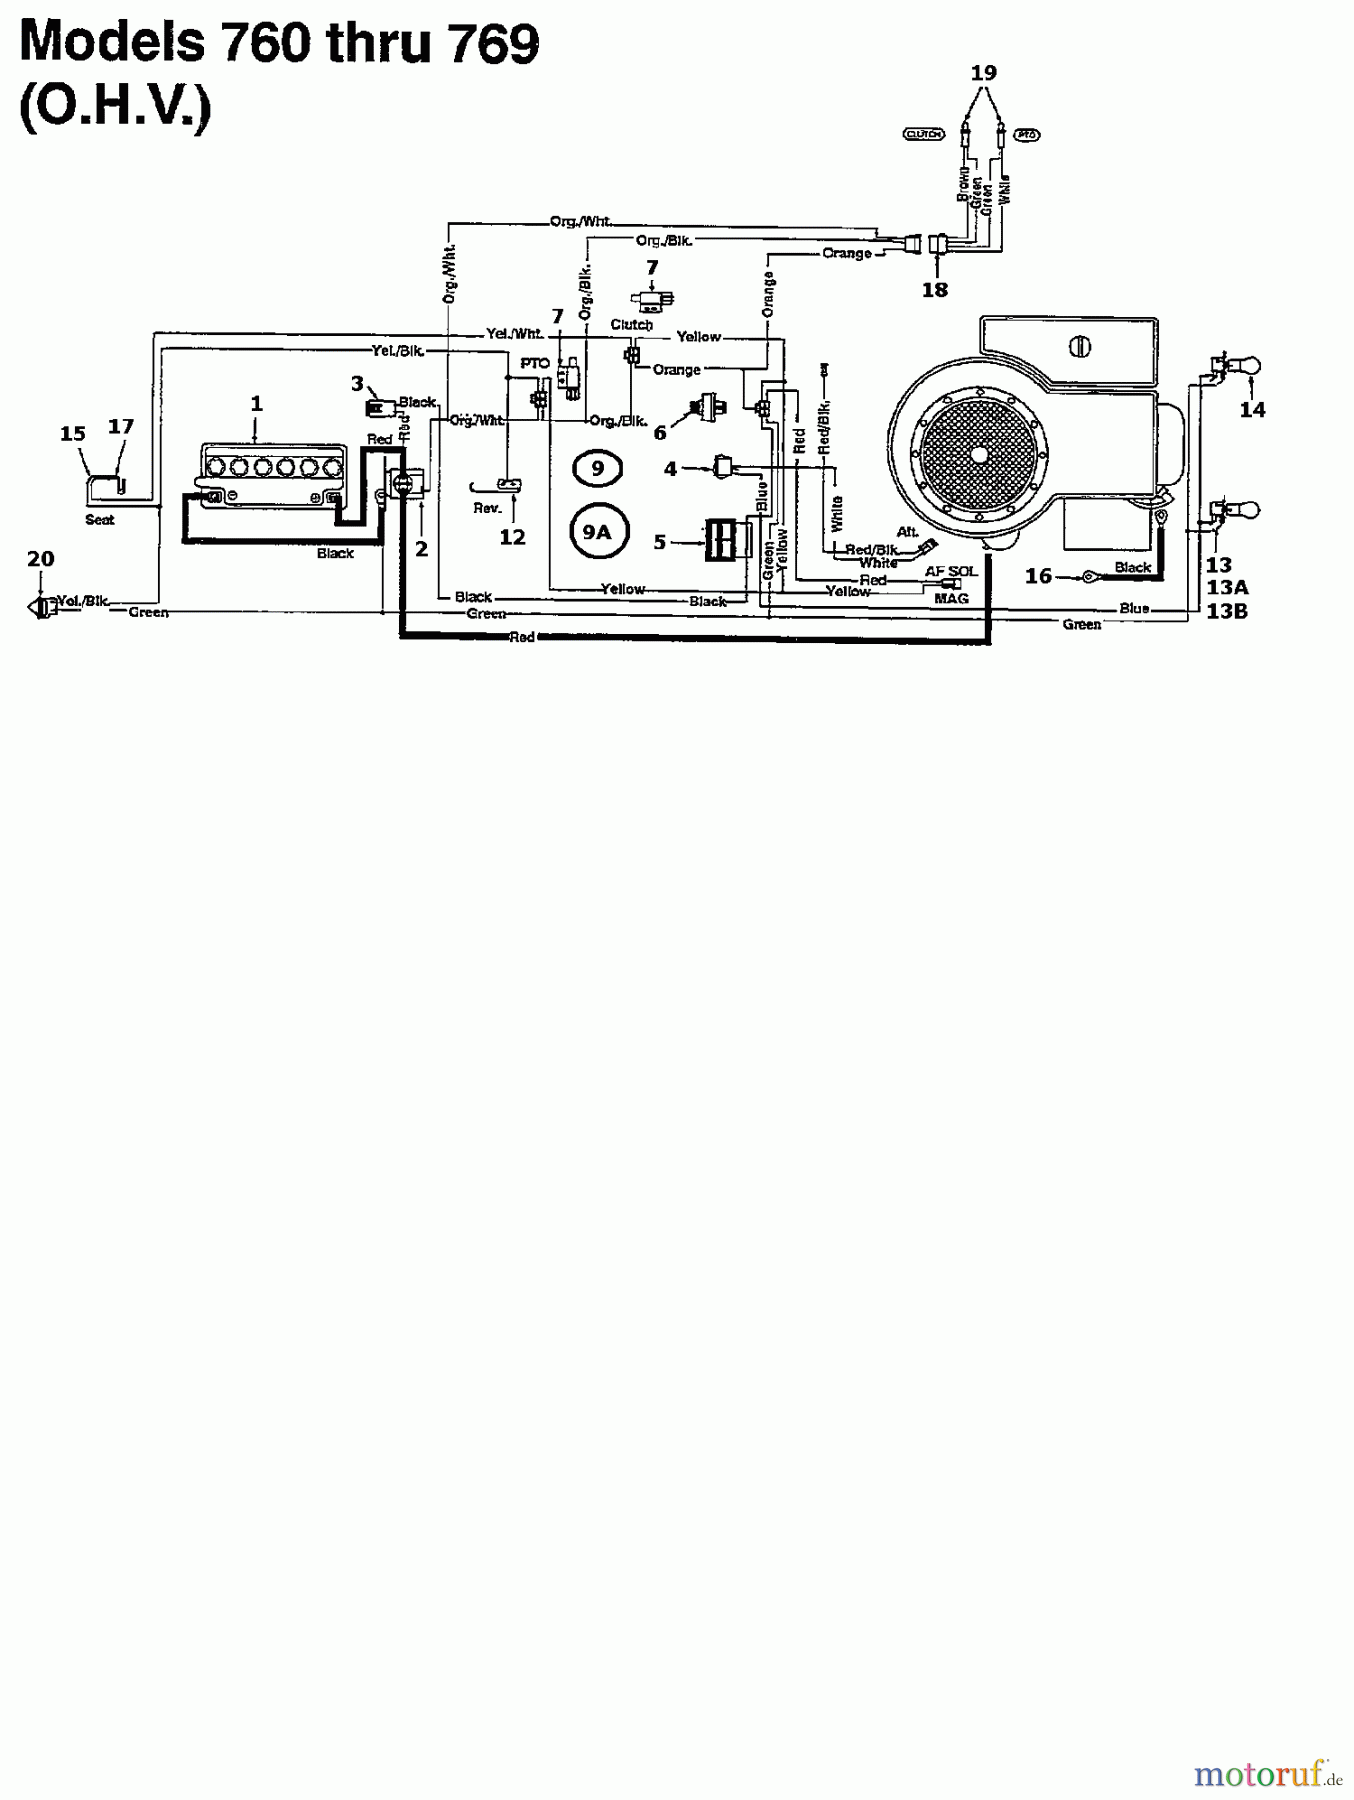  MTD Lawn tractors 13/102 135N765N678  (1995) Wiring diagram for O.H.V.